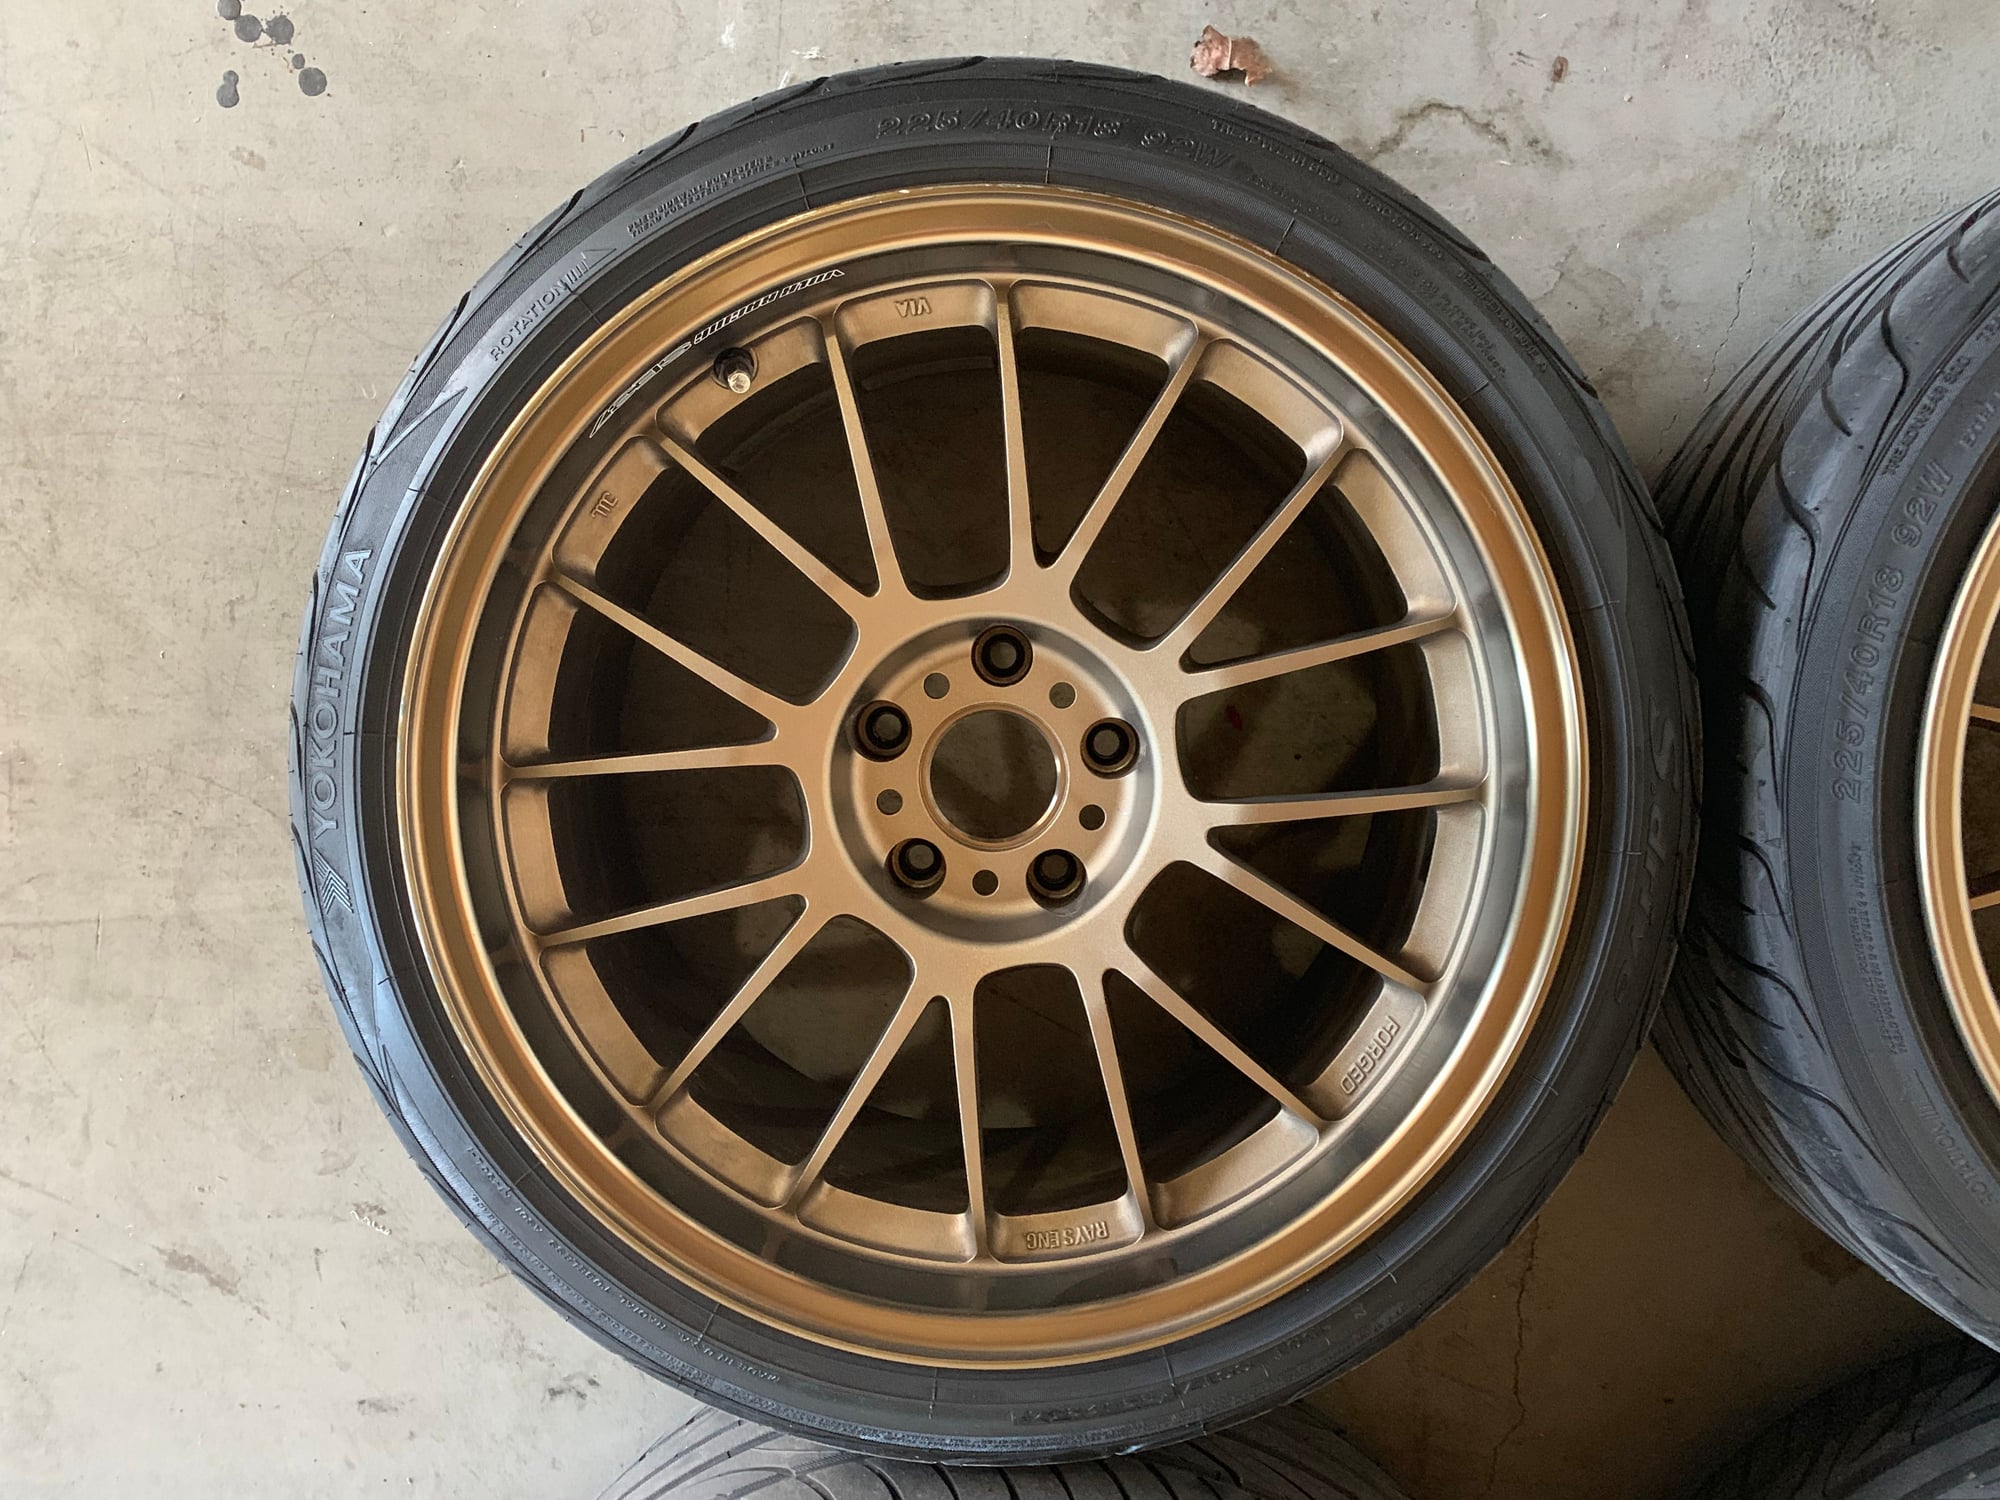 Wheels and Tires/Axles - Rare volk racing se37 og bronze - Used - Perris, CA 92571, United States